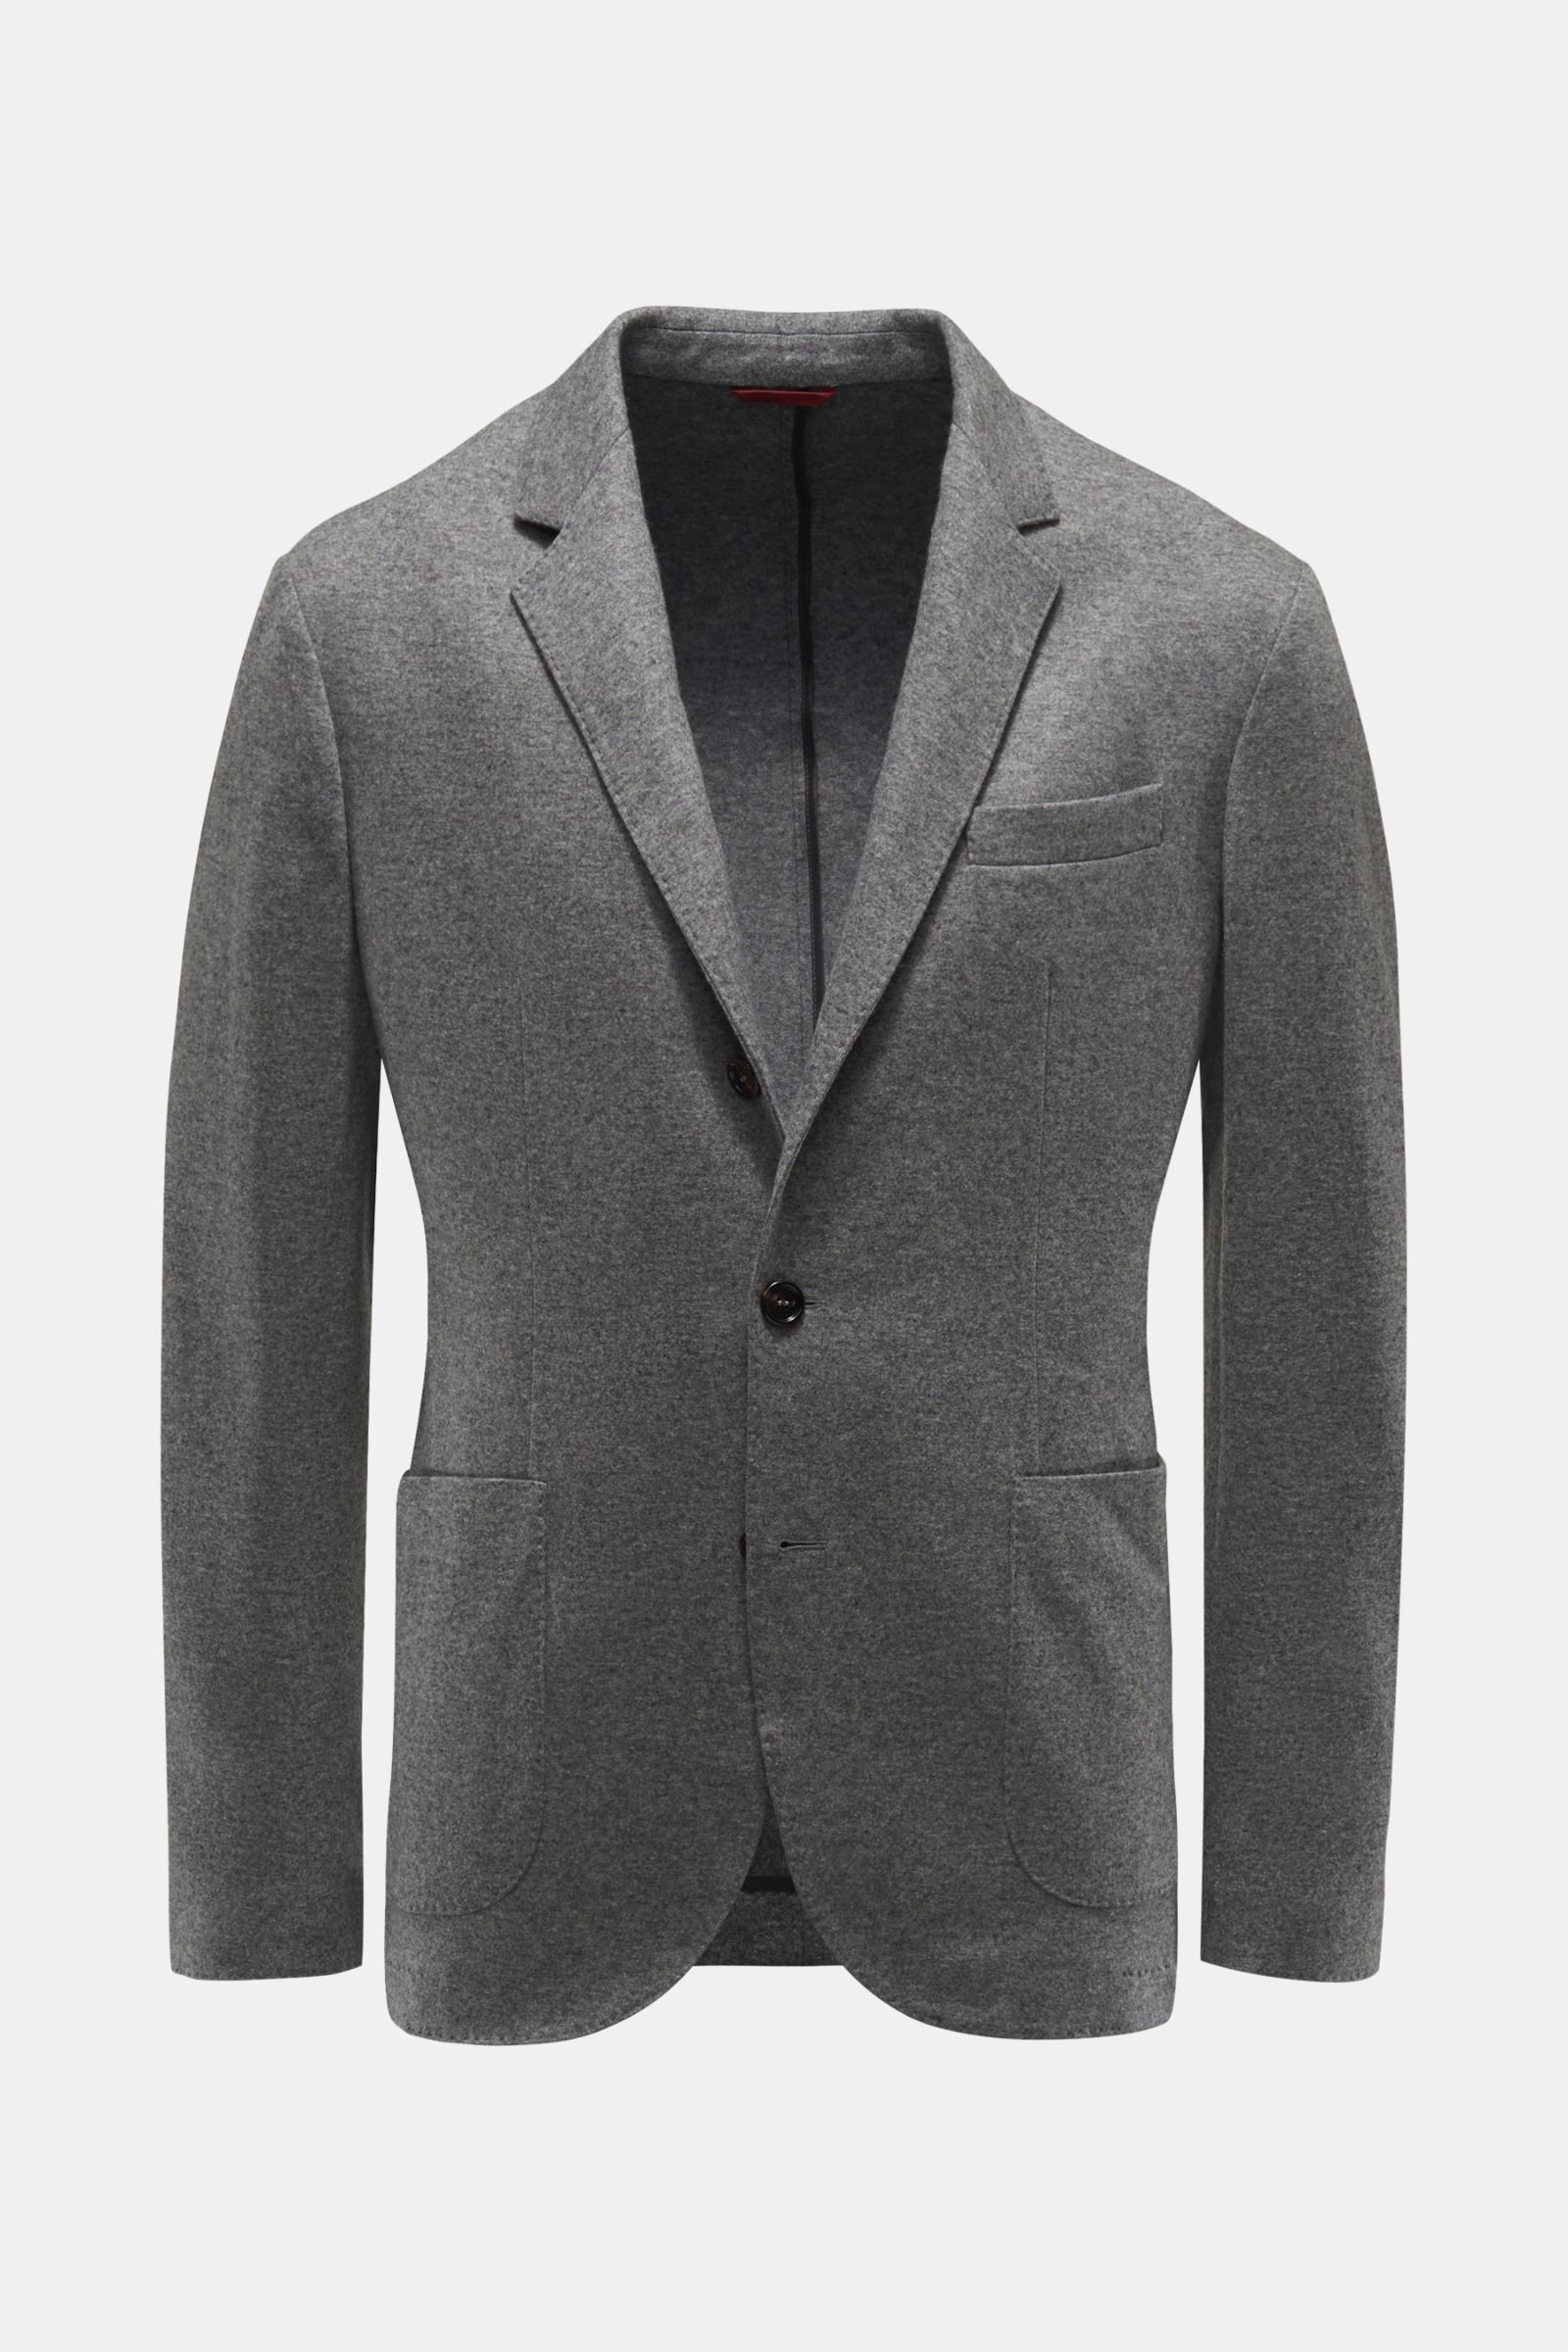 Cashmere jersey smart-casual jacket dark grey